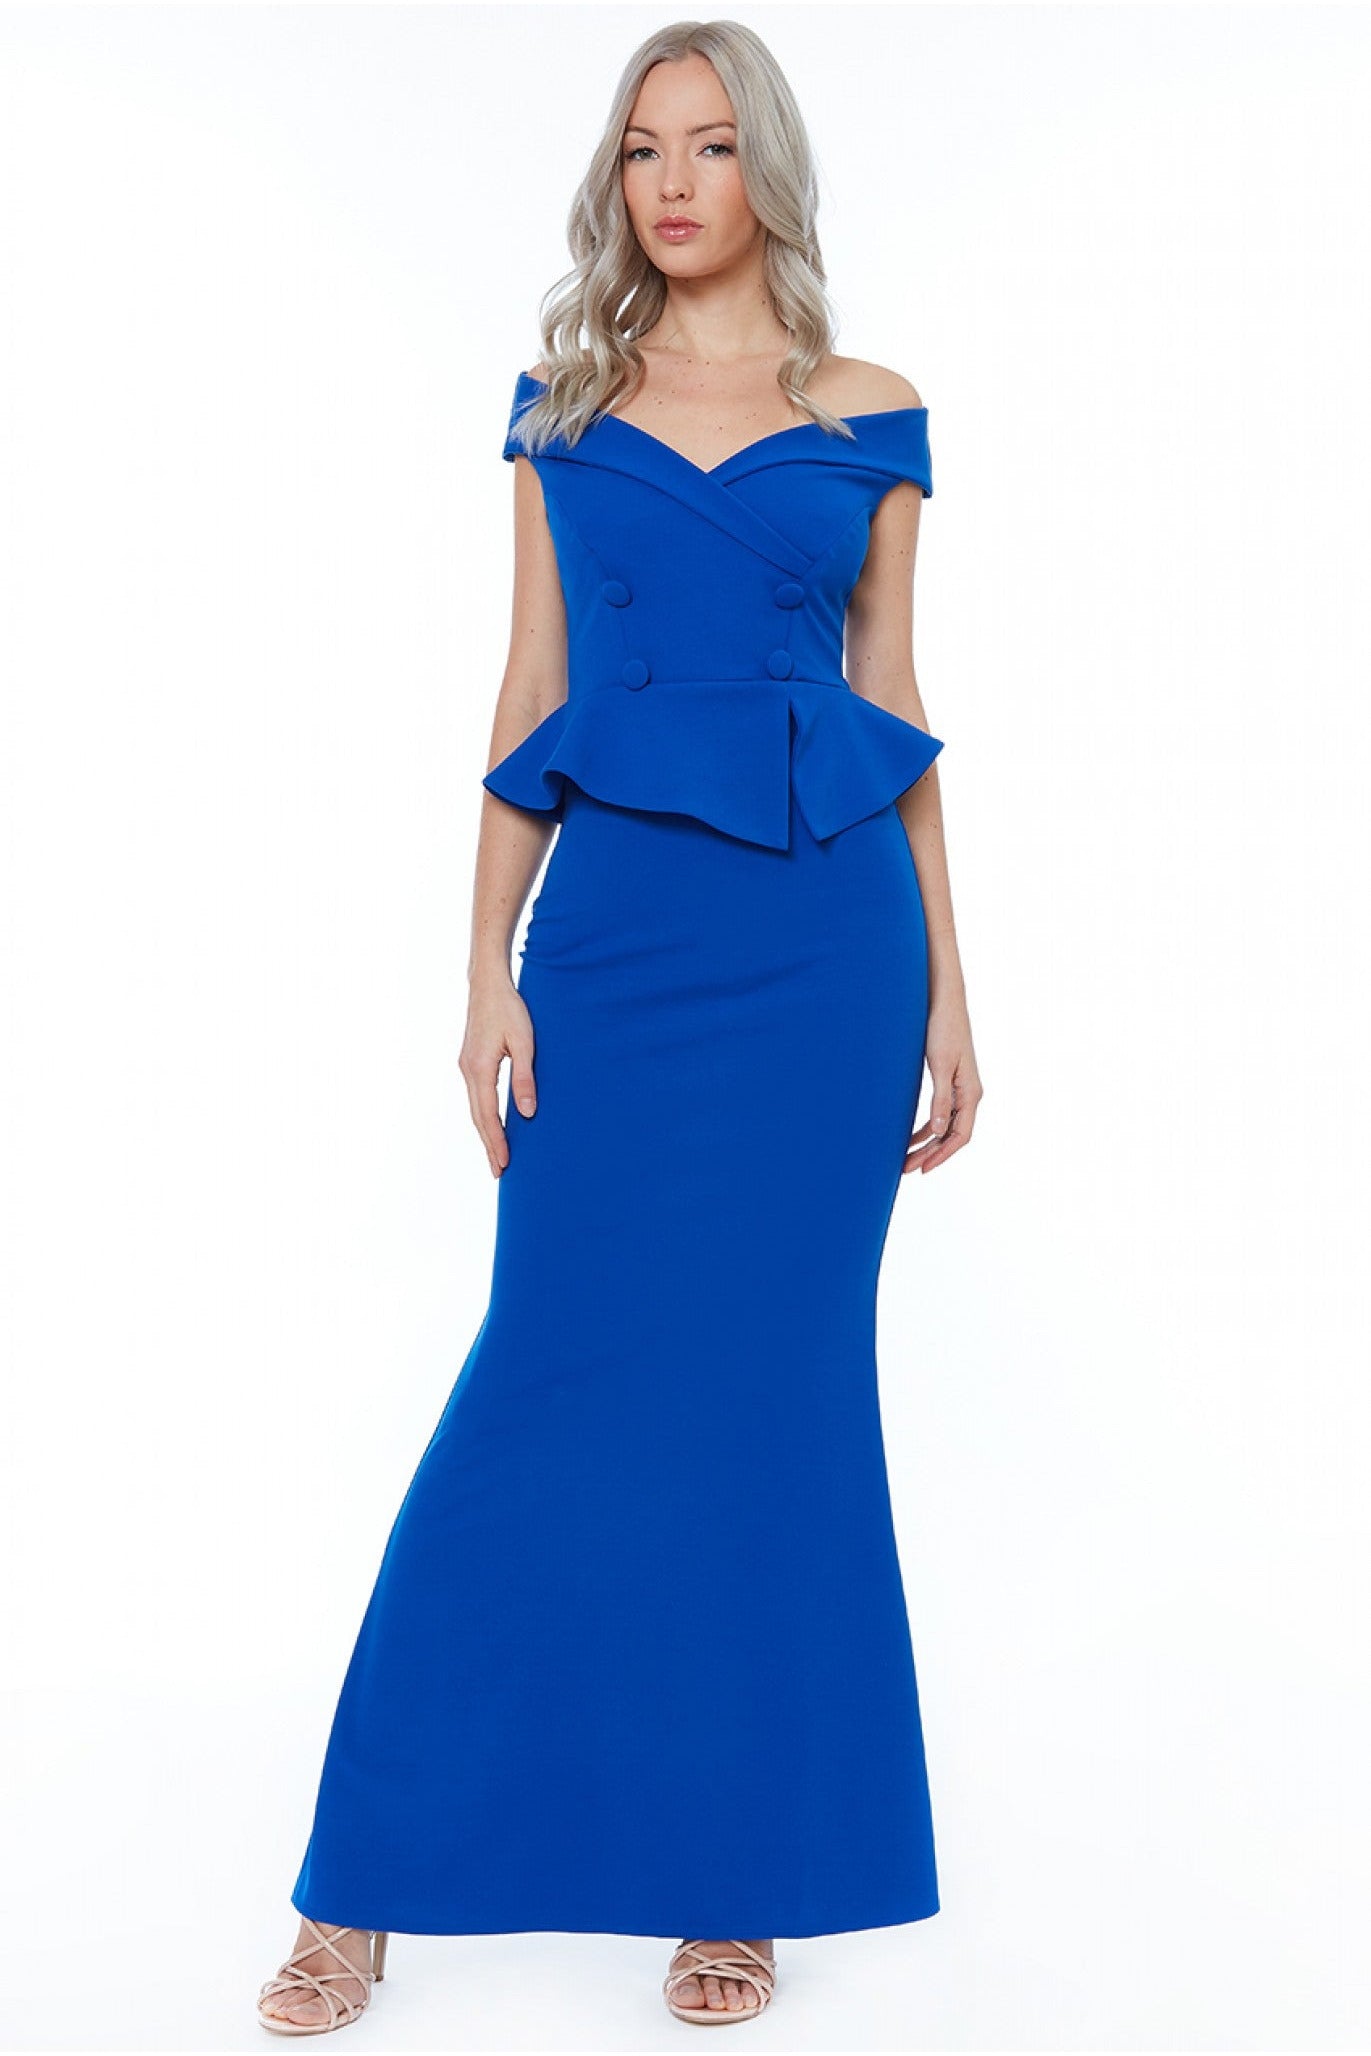 Goddiva Bardot Crossover Maxi Dress - Vividblue